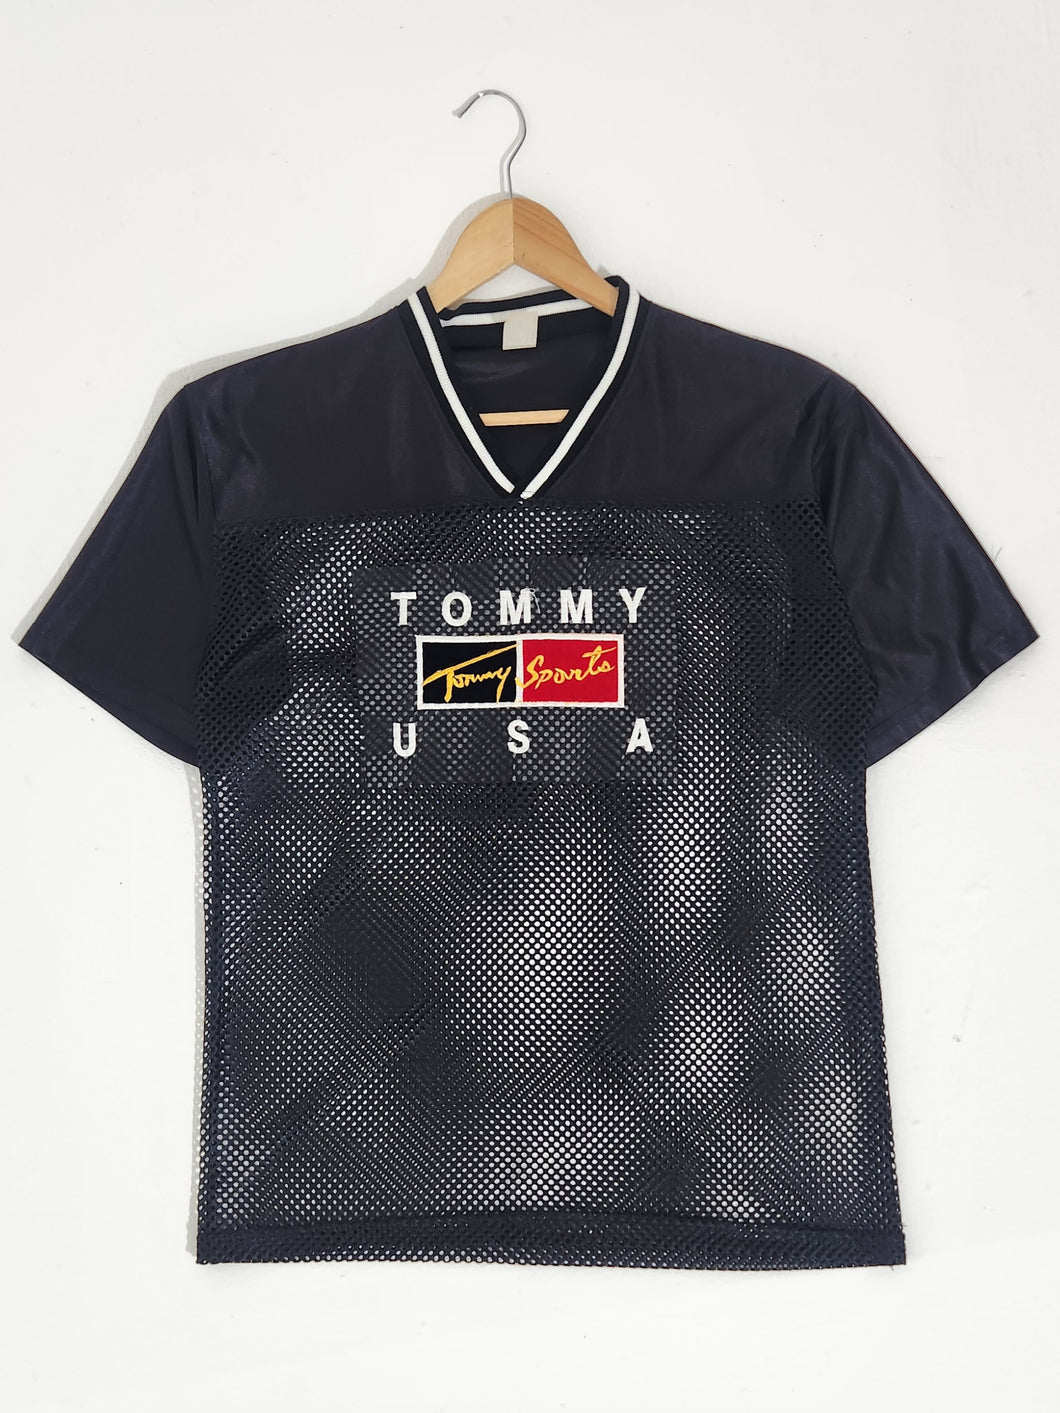 Tommy Sports Mesh Jersey Sz. M